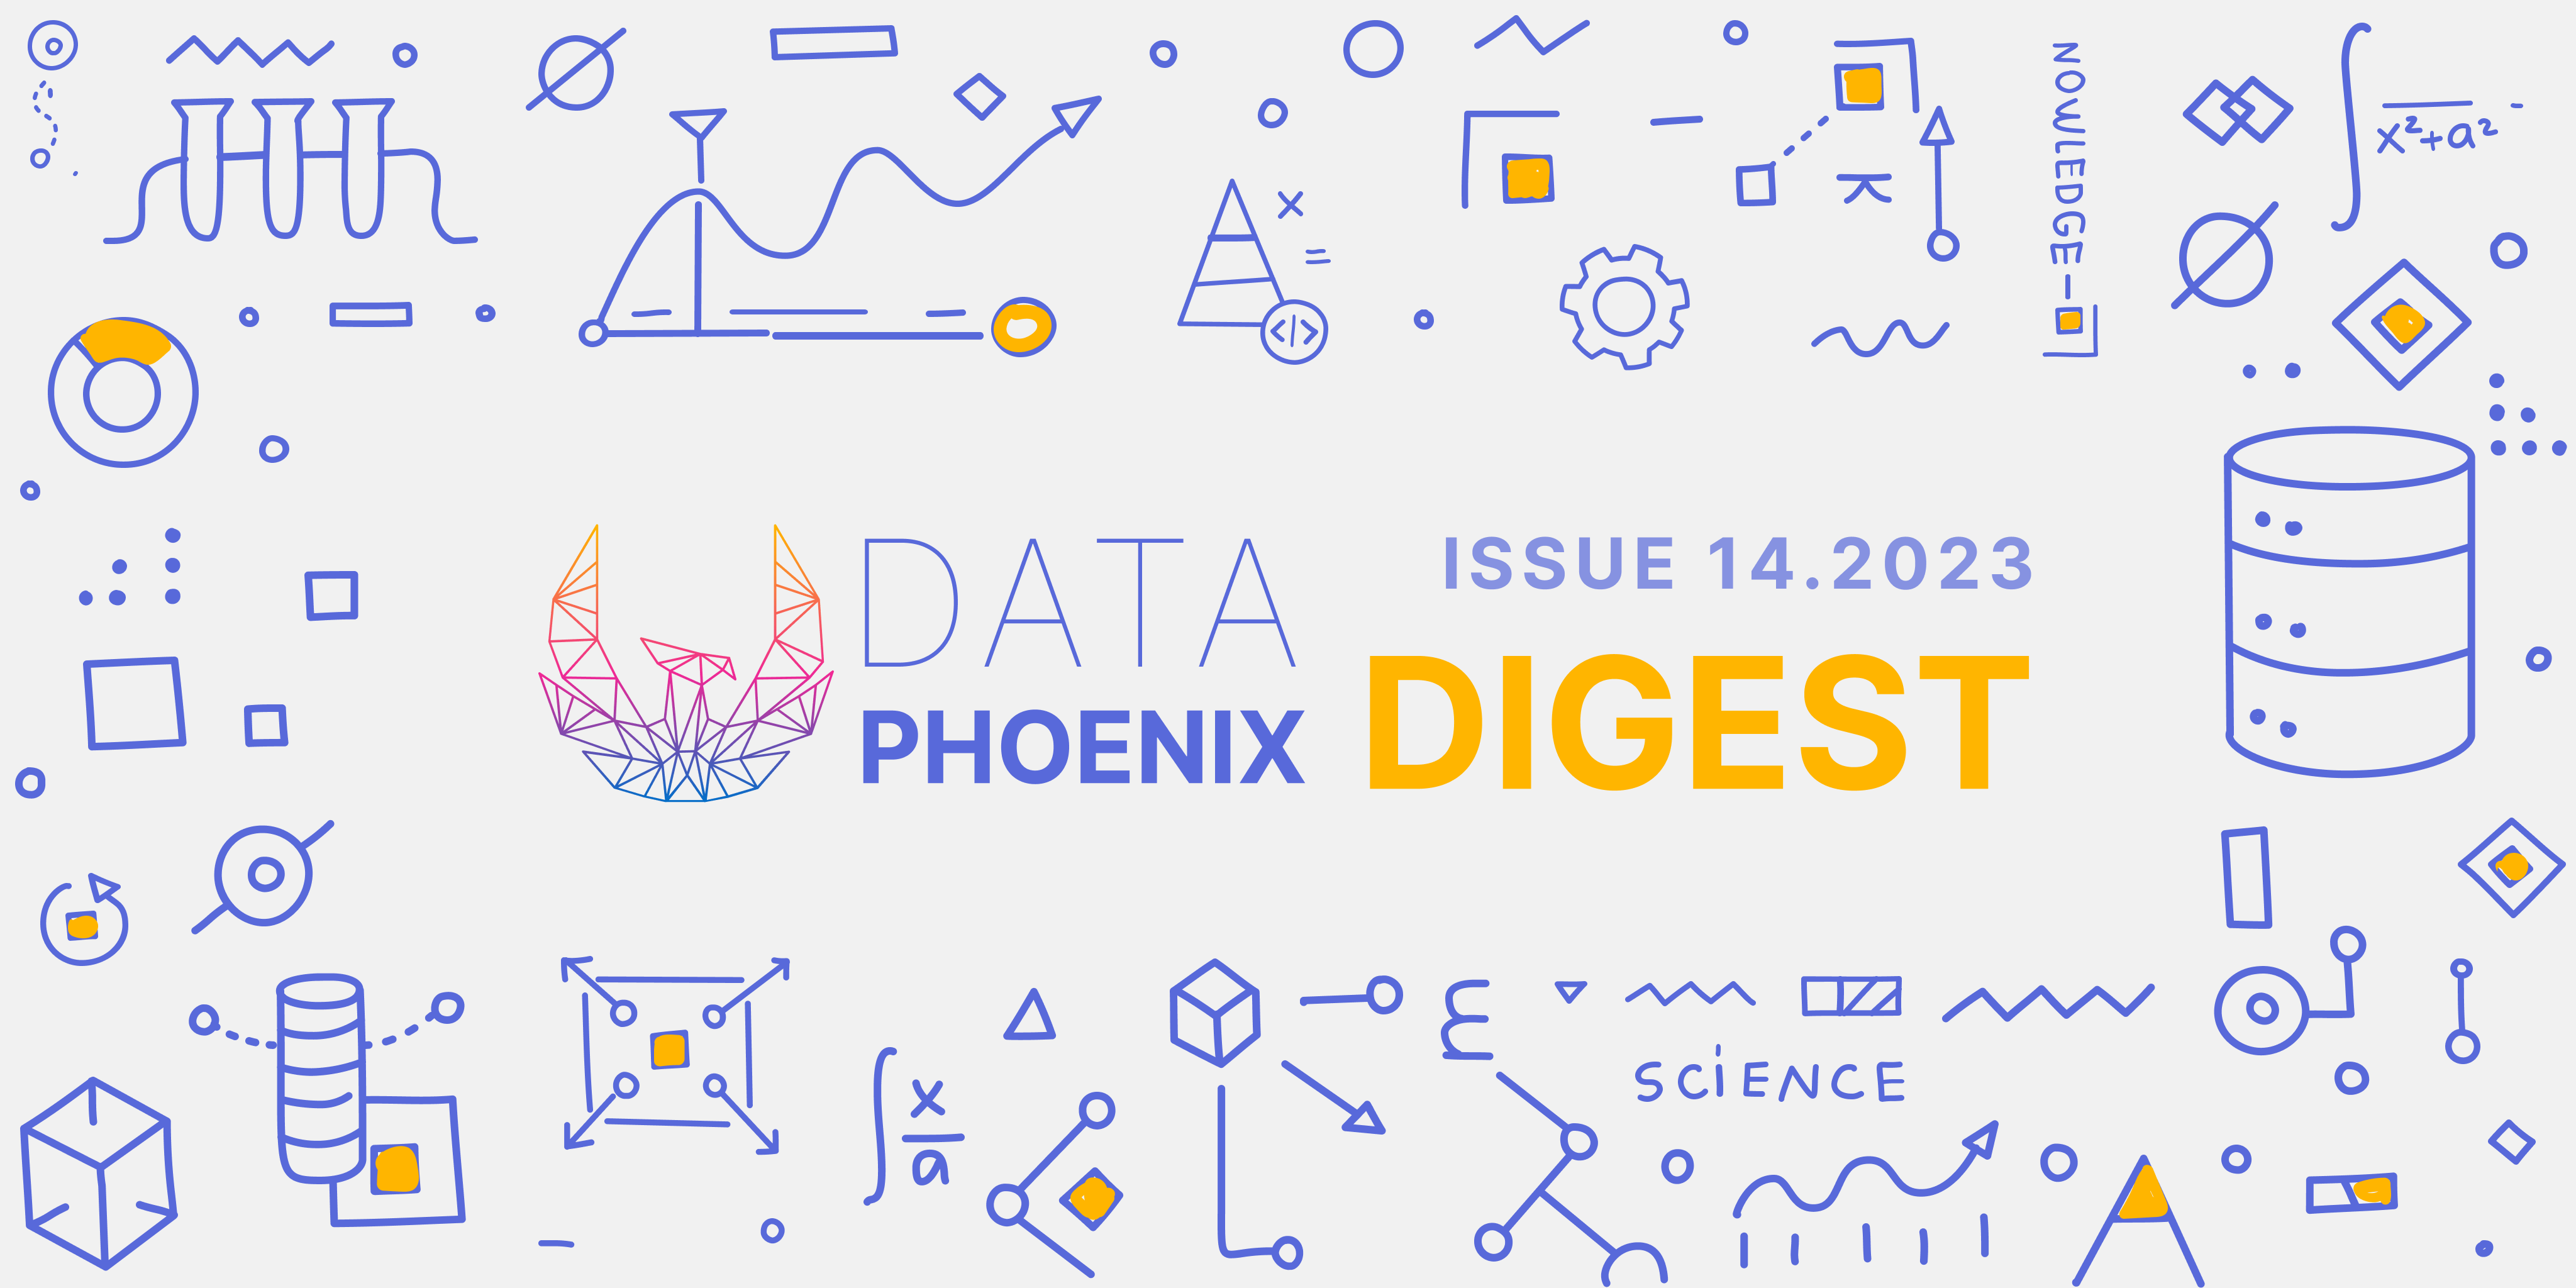 Data Phoenix Digest - ISSUE 14.2023 post image